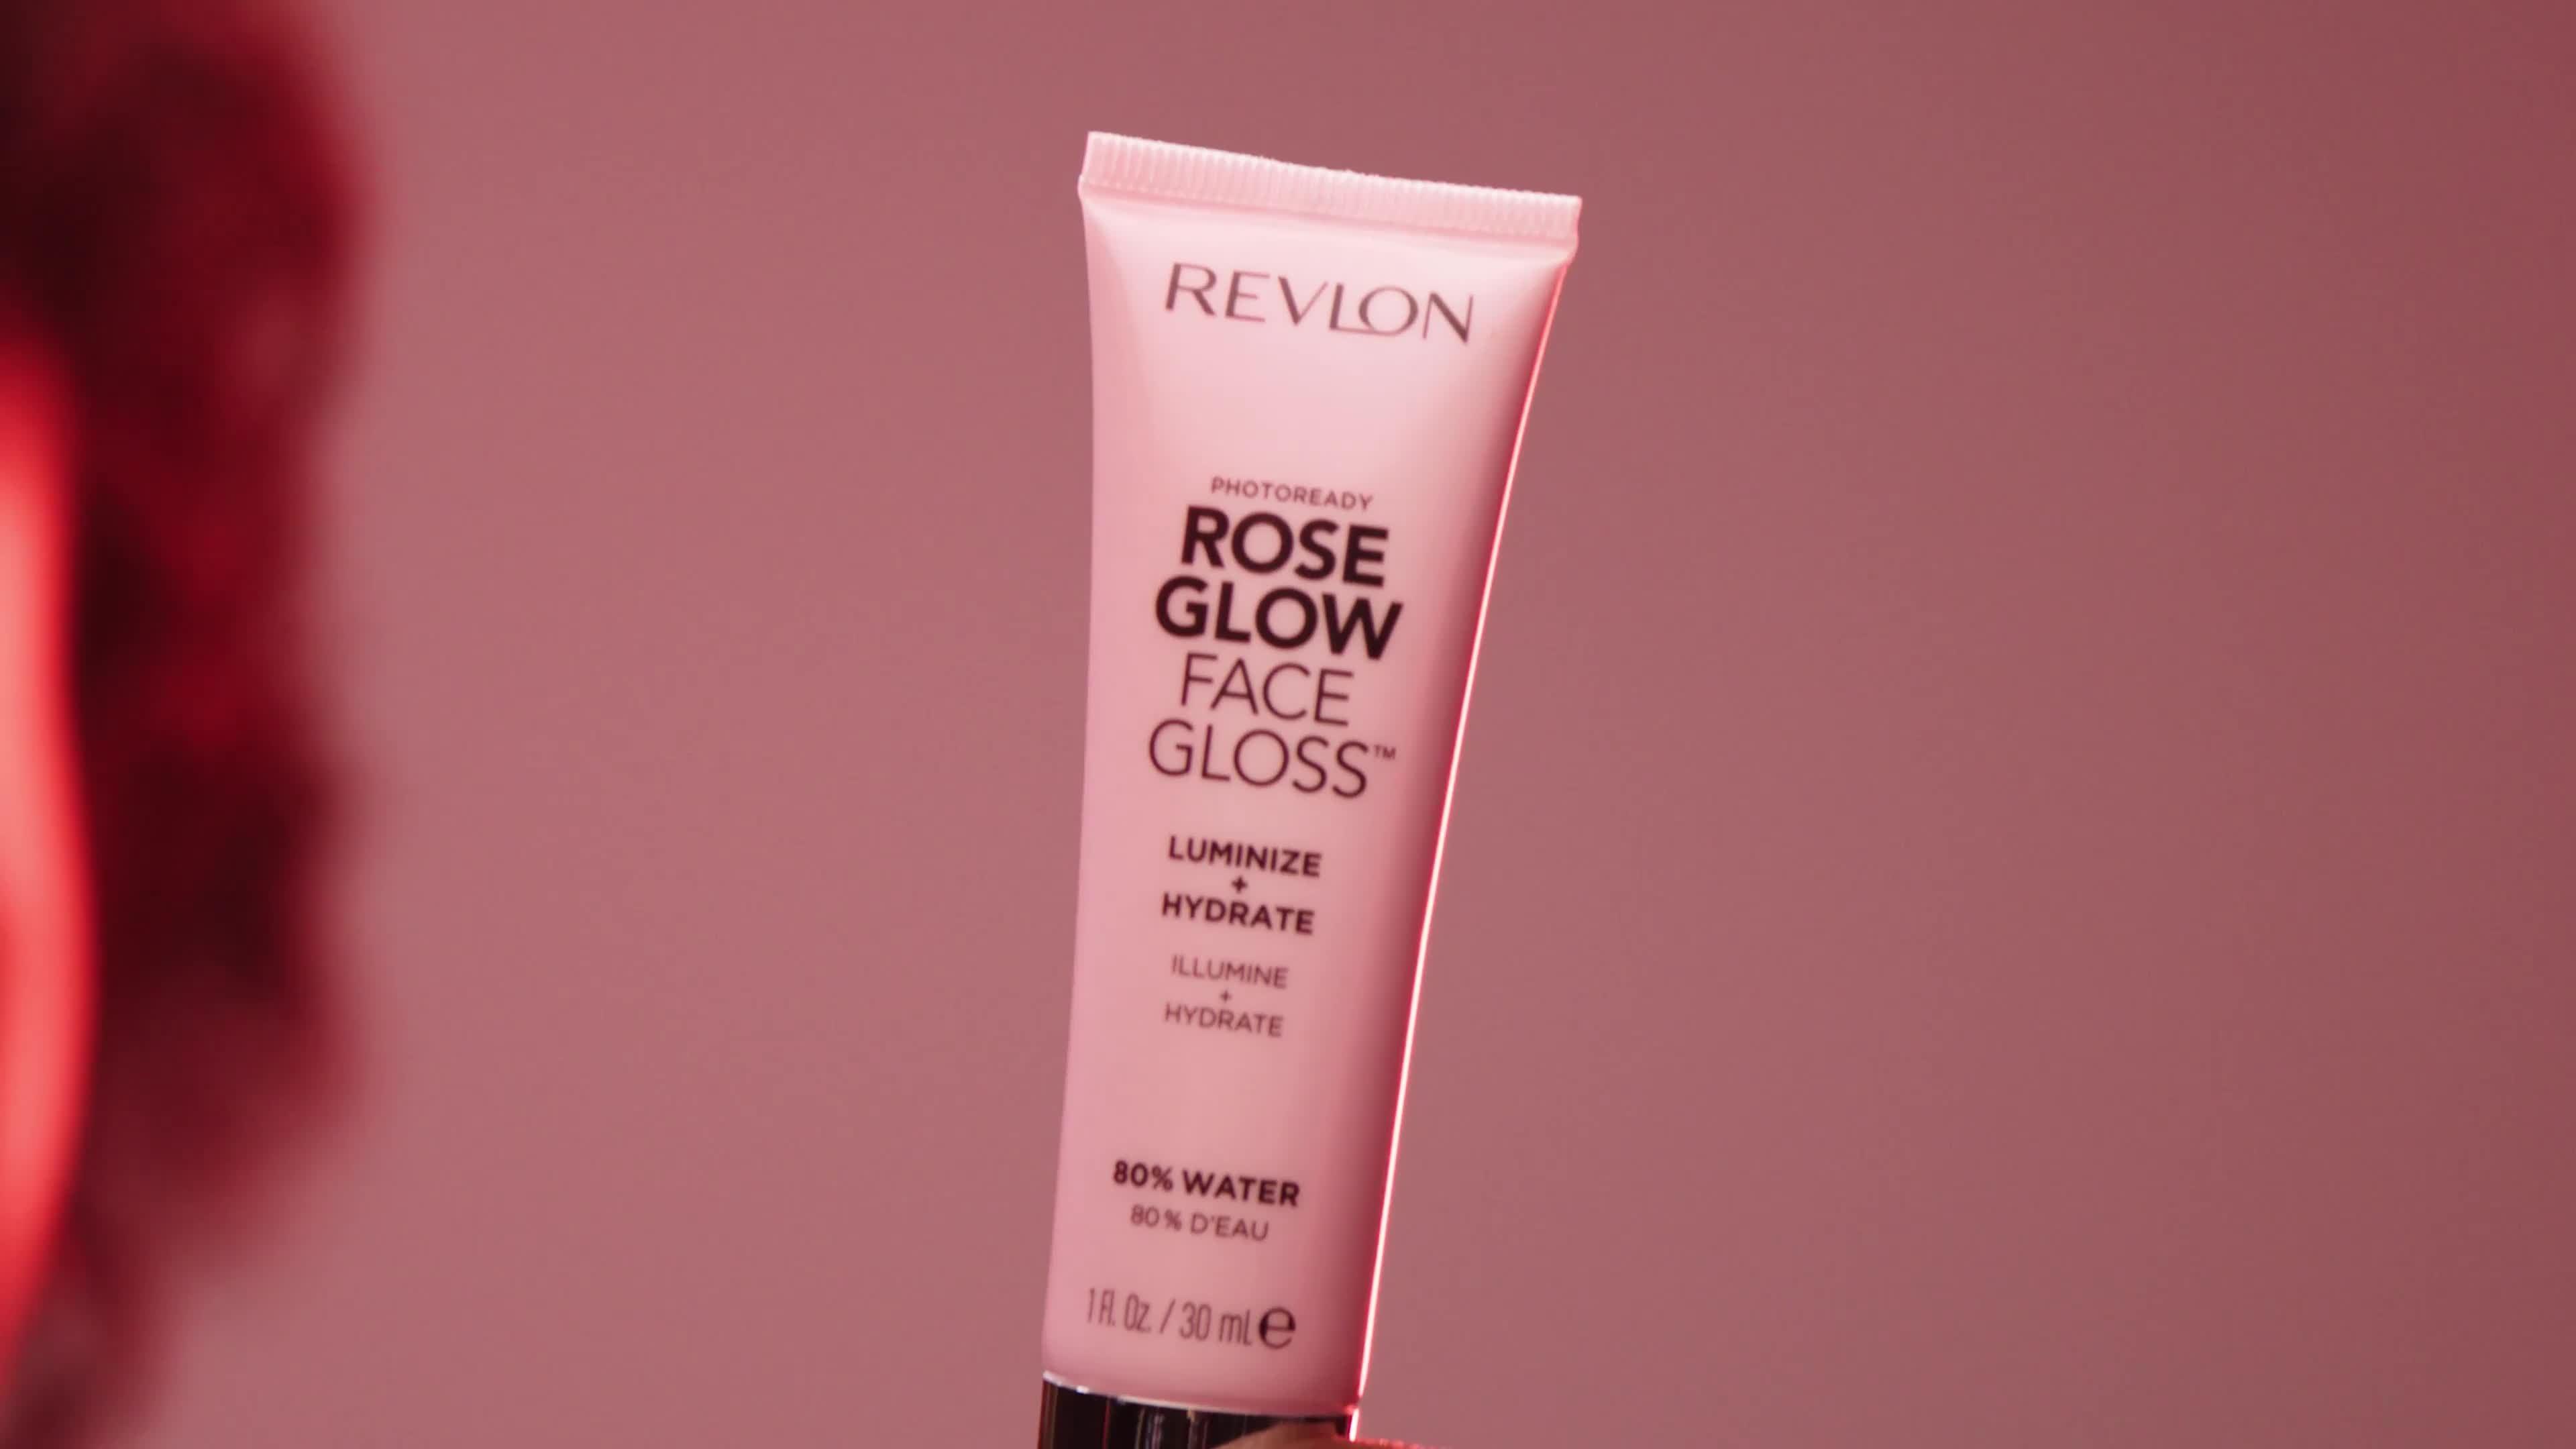 PhotoReady Rose Glow Face Mist - Revlon